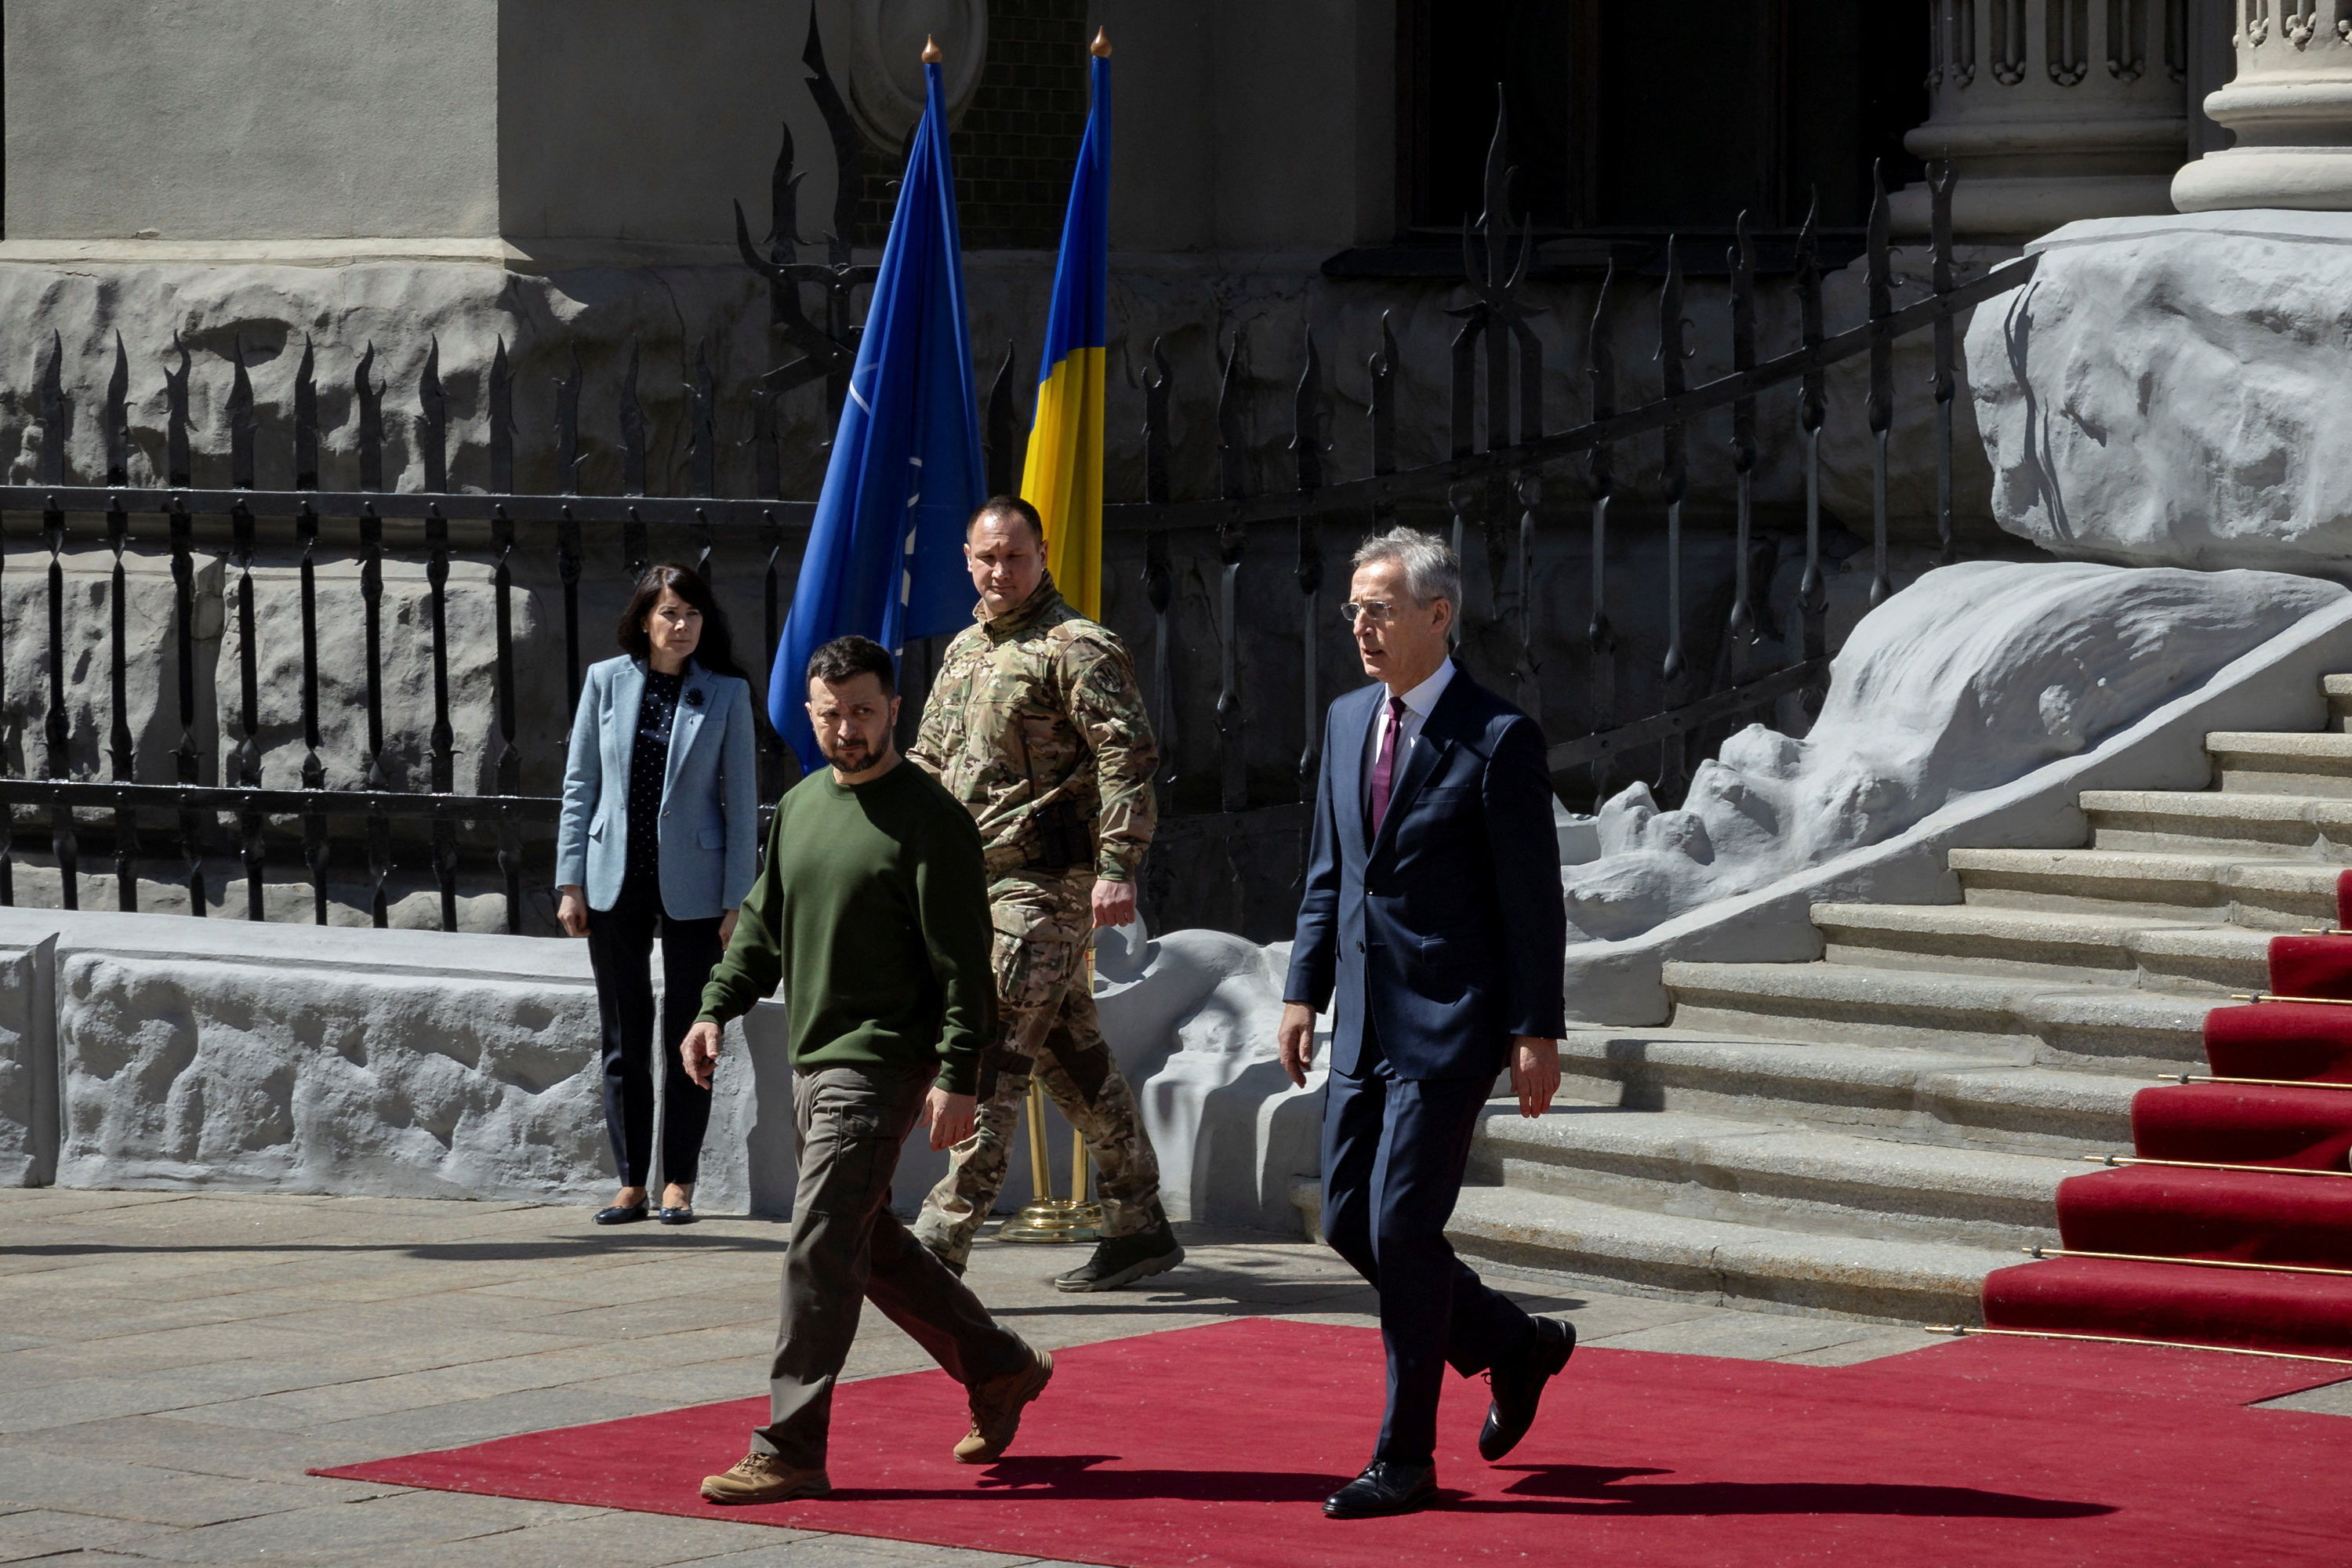 Ukraine's President Volodymyr Zelenskiy and NATO Secretary-General Jens Stoltenberg arrive for a press conference in Kyiv